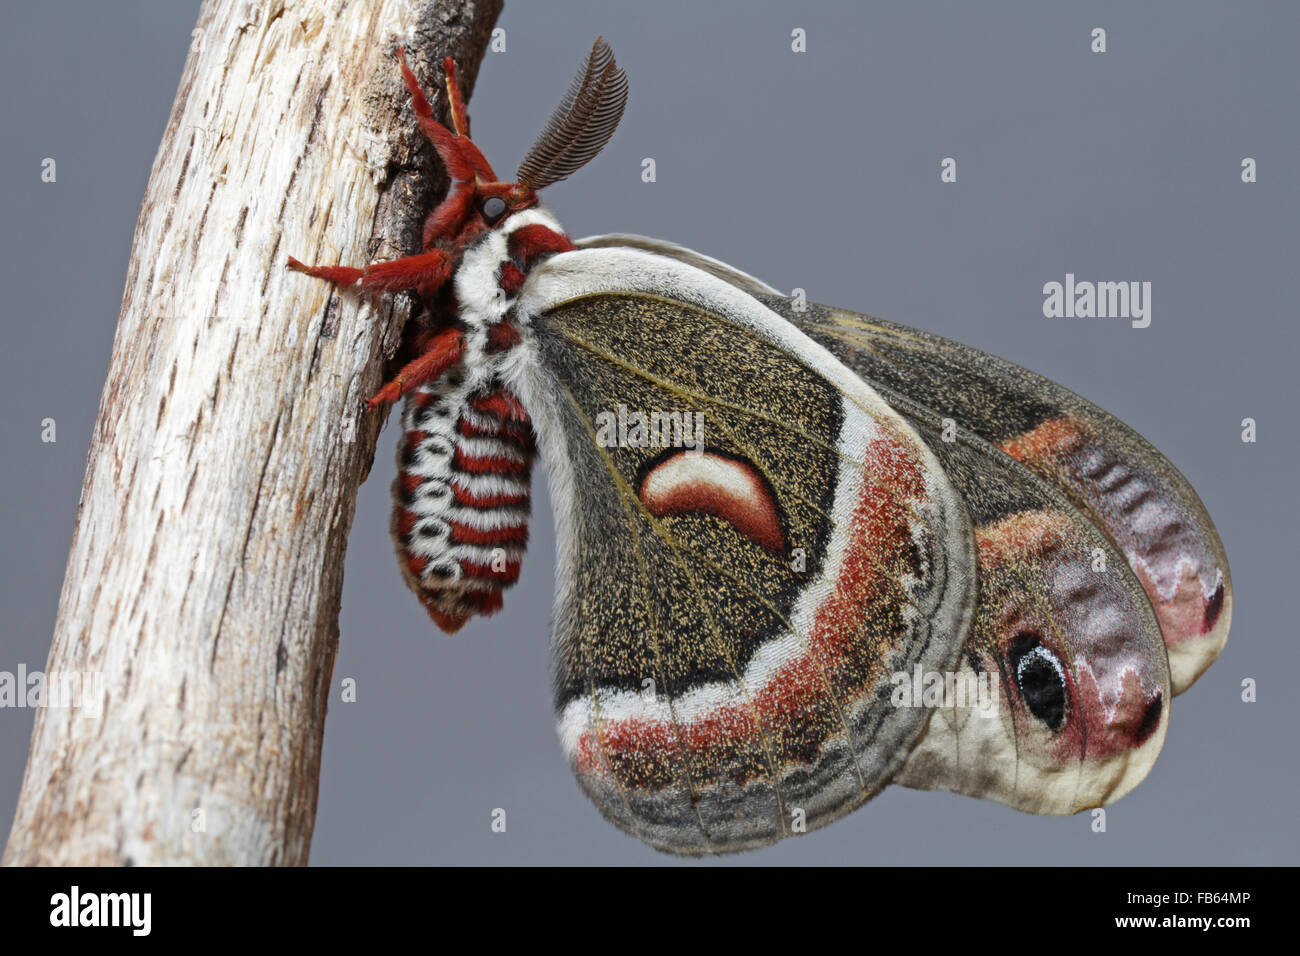 Adult cecropia moth male, Hyalophora cecropia Stock Photo